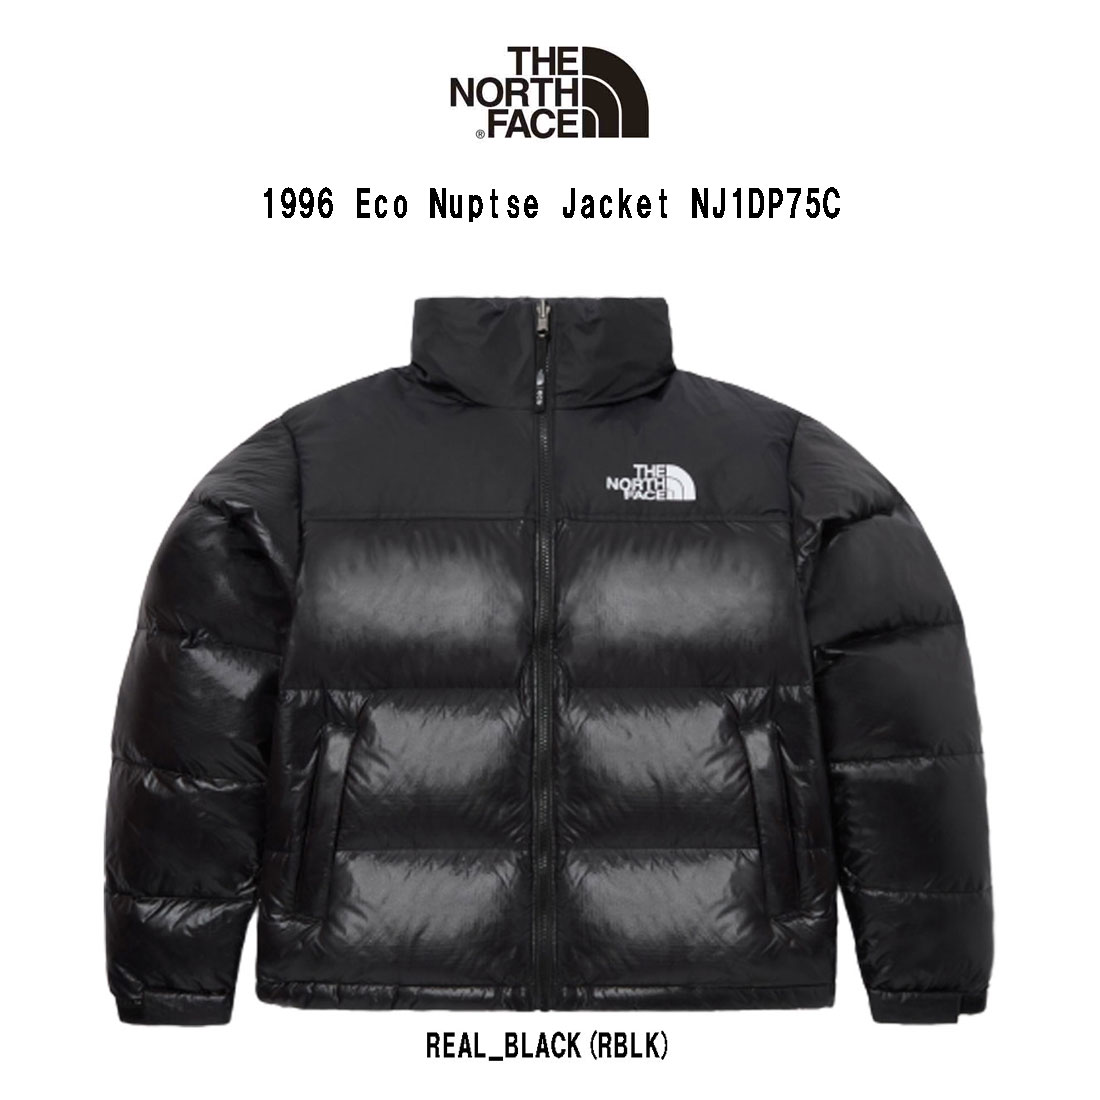 THE NORTH FACE ザノースフェイス ダウンジャケット アウター ヌプシ メンズ 1996 Eco Nuptse Jacket NJ1DP75C 韓国輸入品